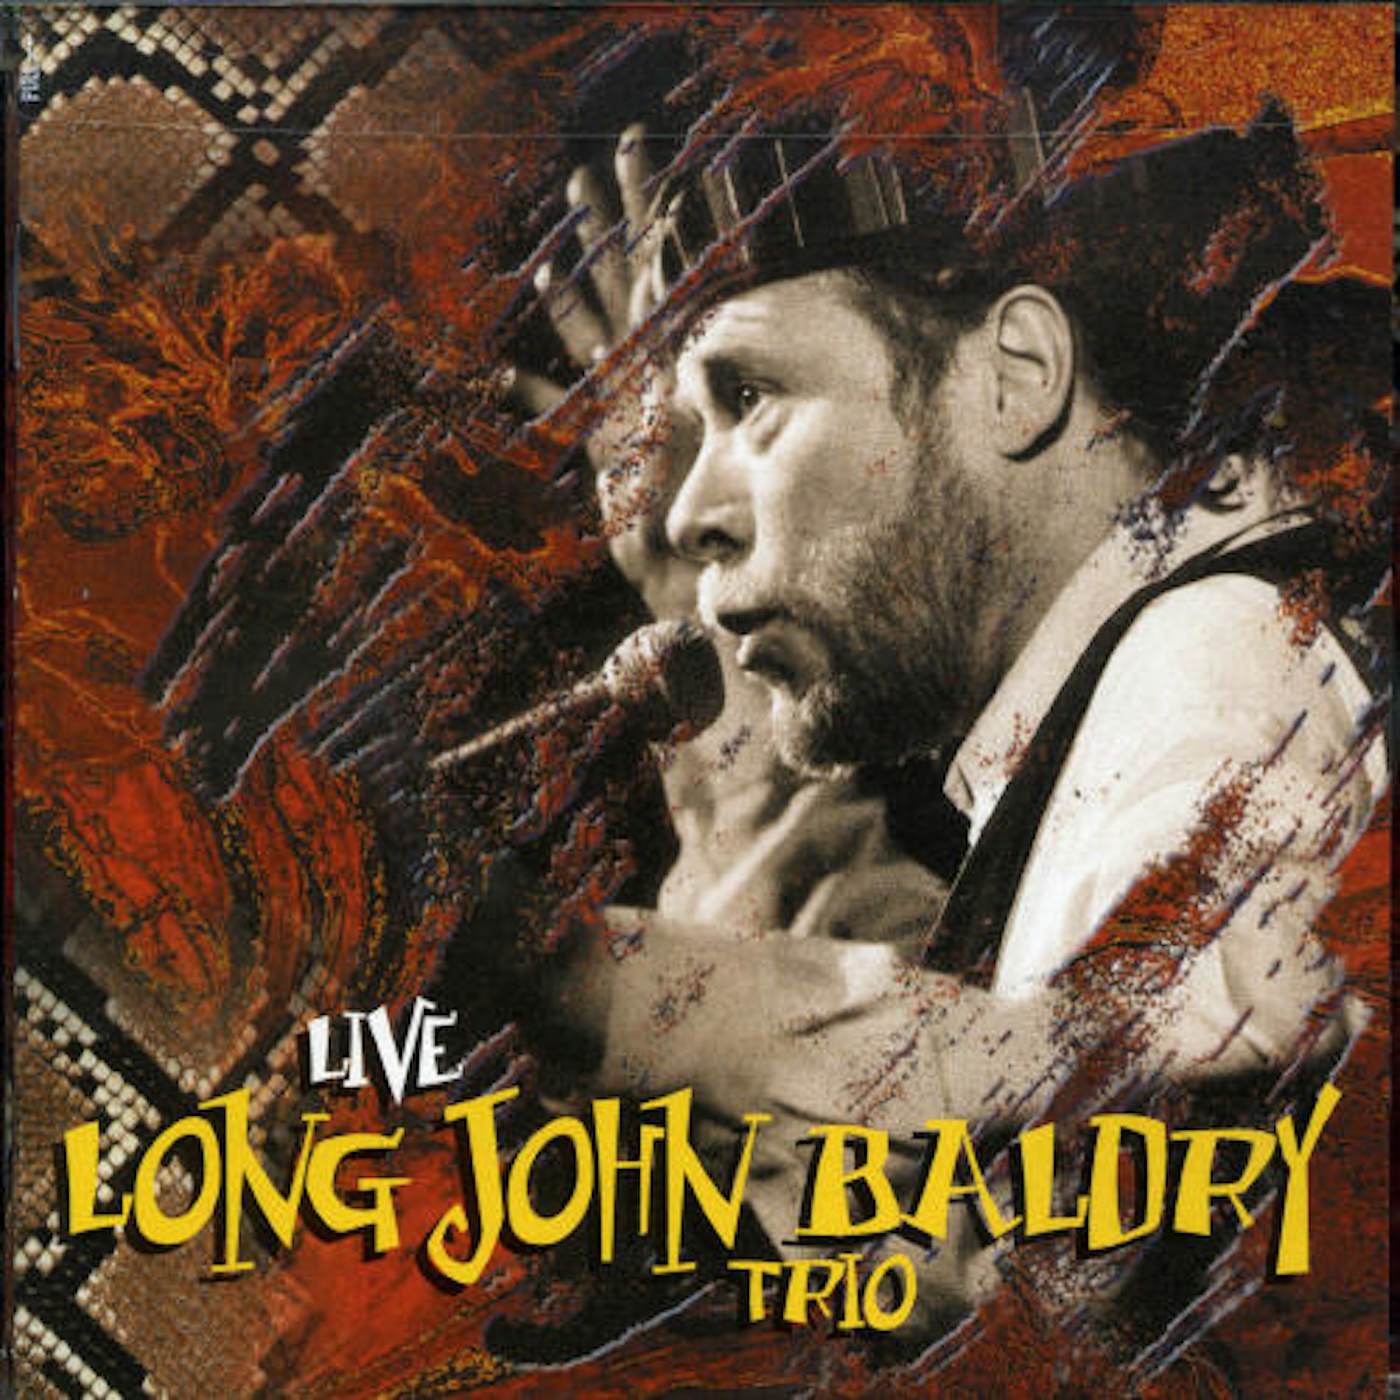 LONG JOHN BALDRY TRIO LIVE CD